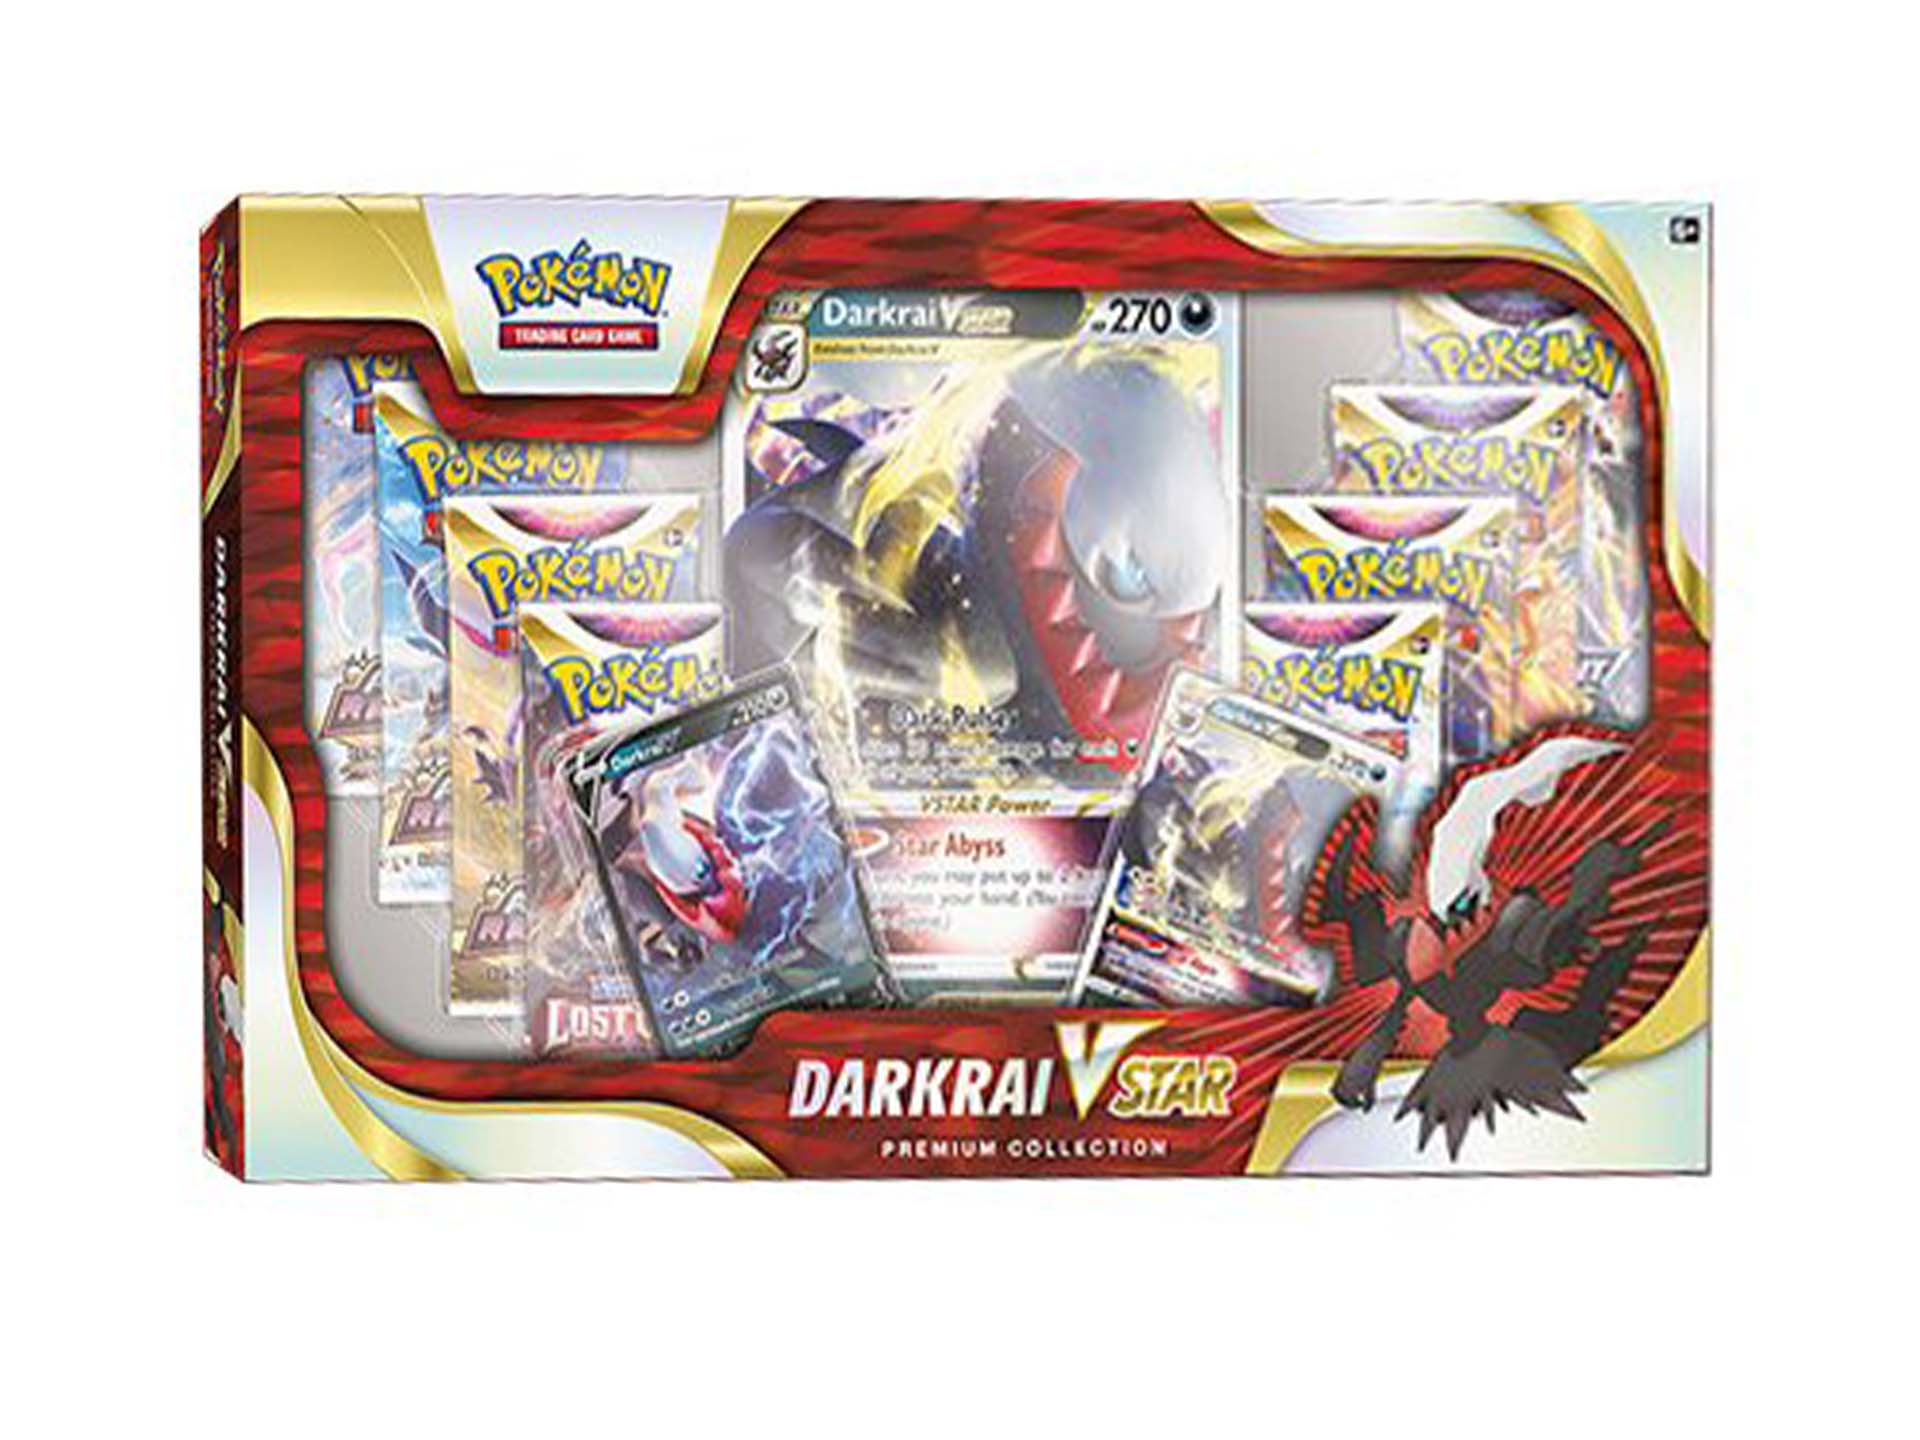 Pokémon Darkrai Vstar Premium Collection Box